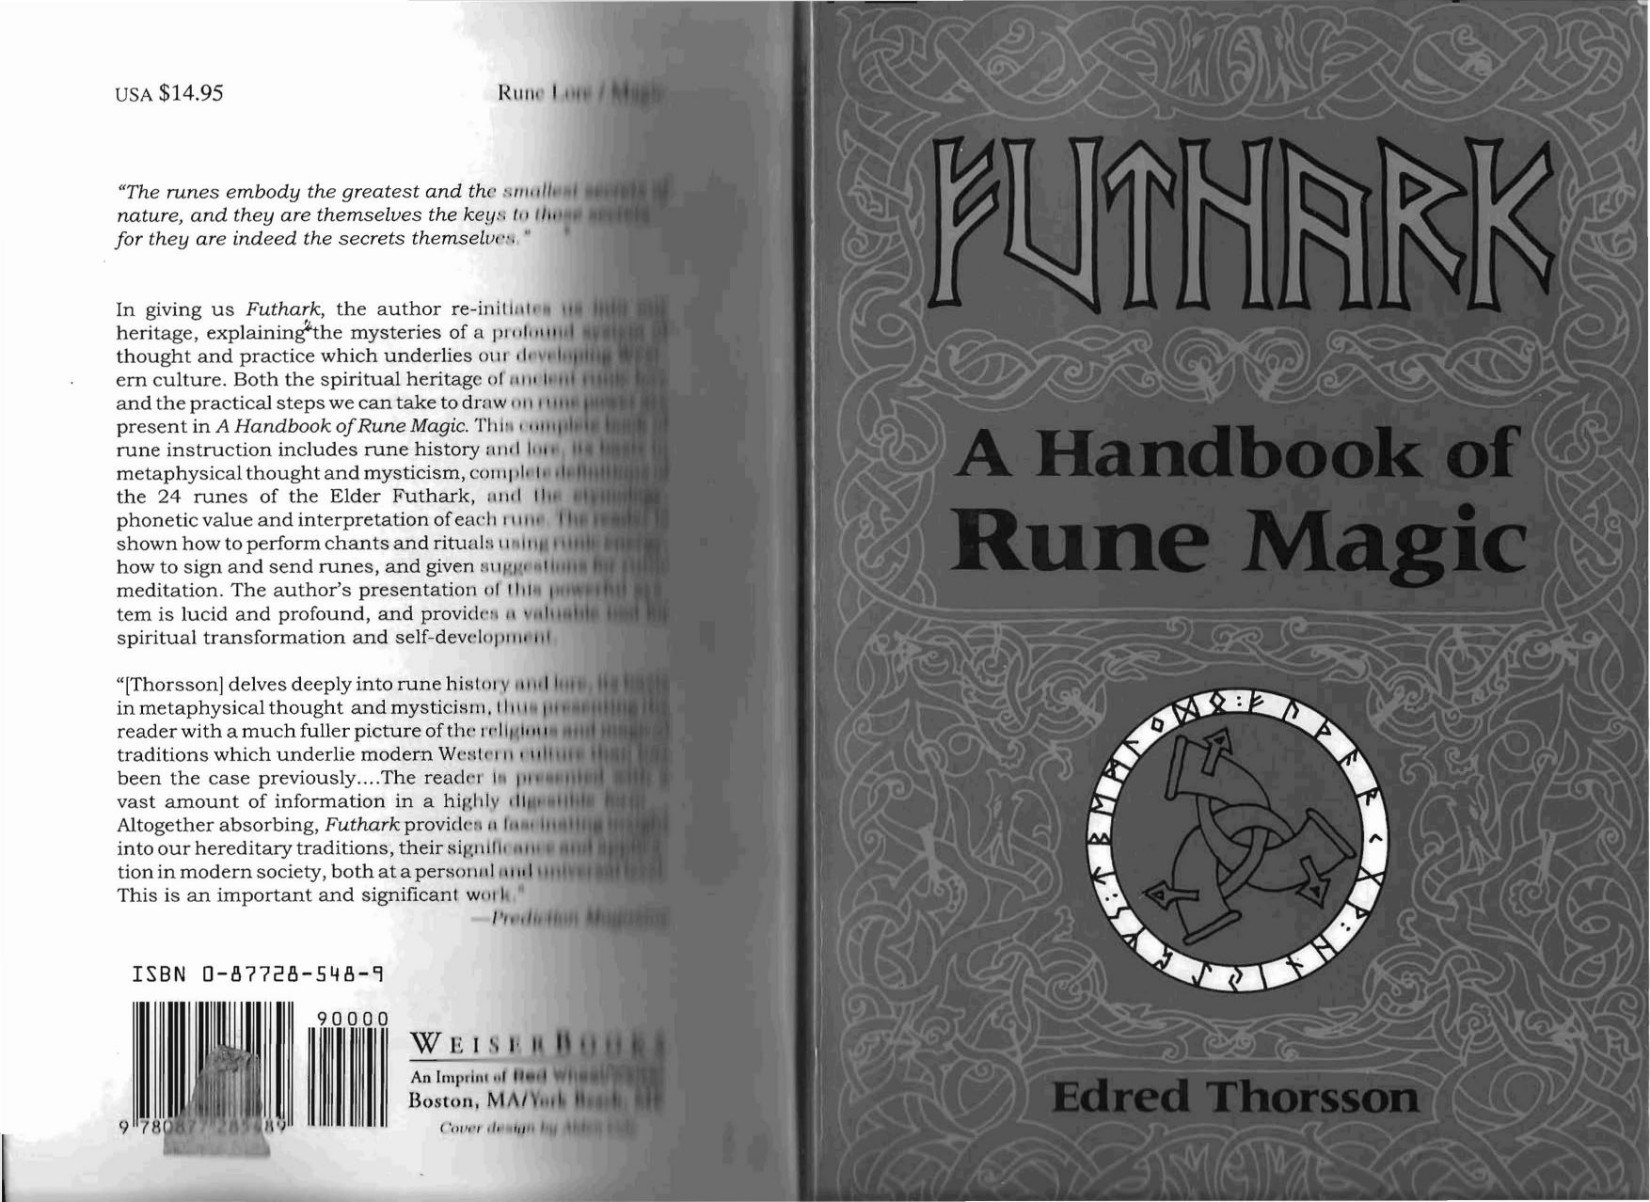 Futhark, a Handbook of Rune Magic